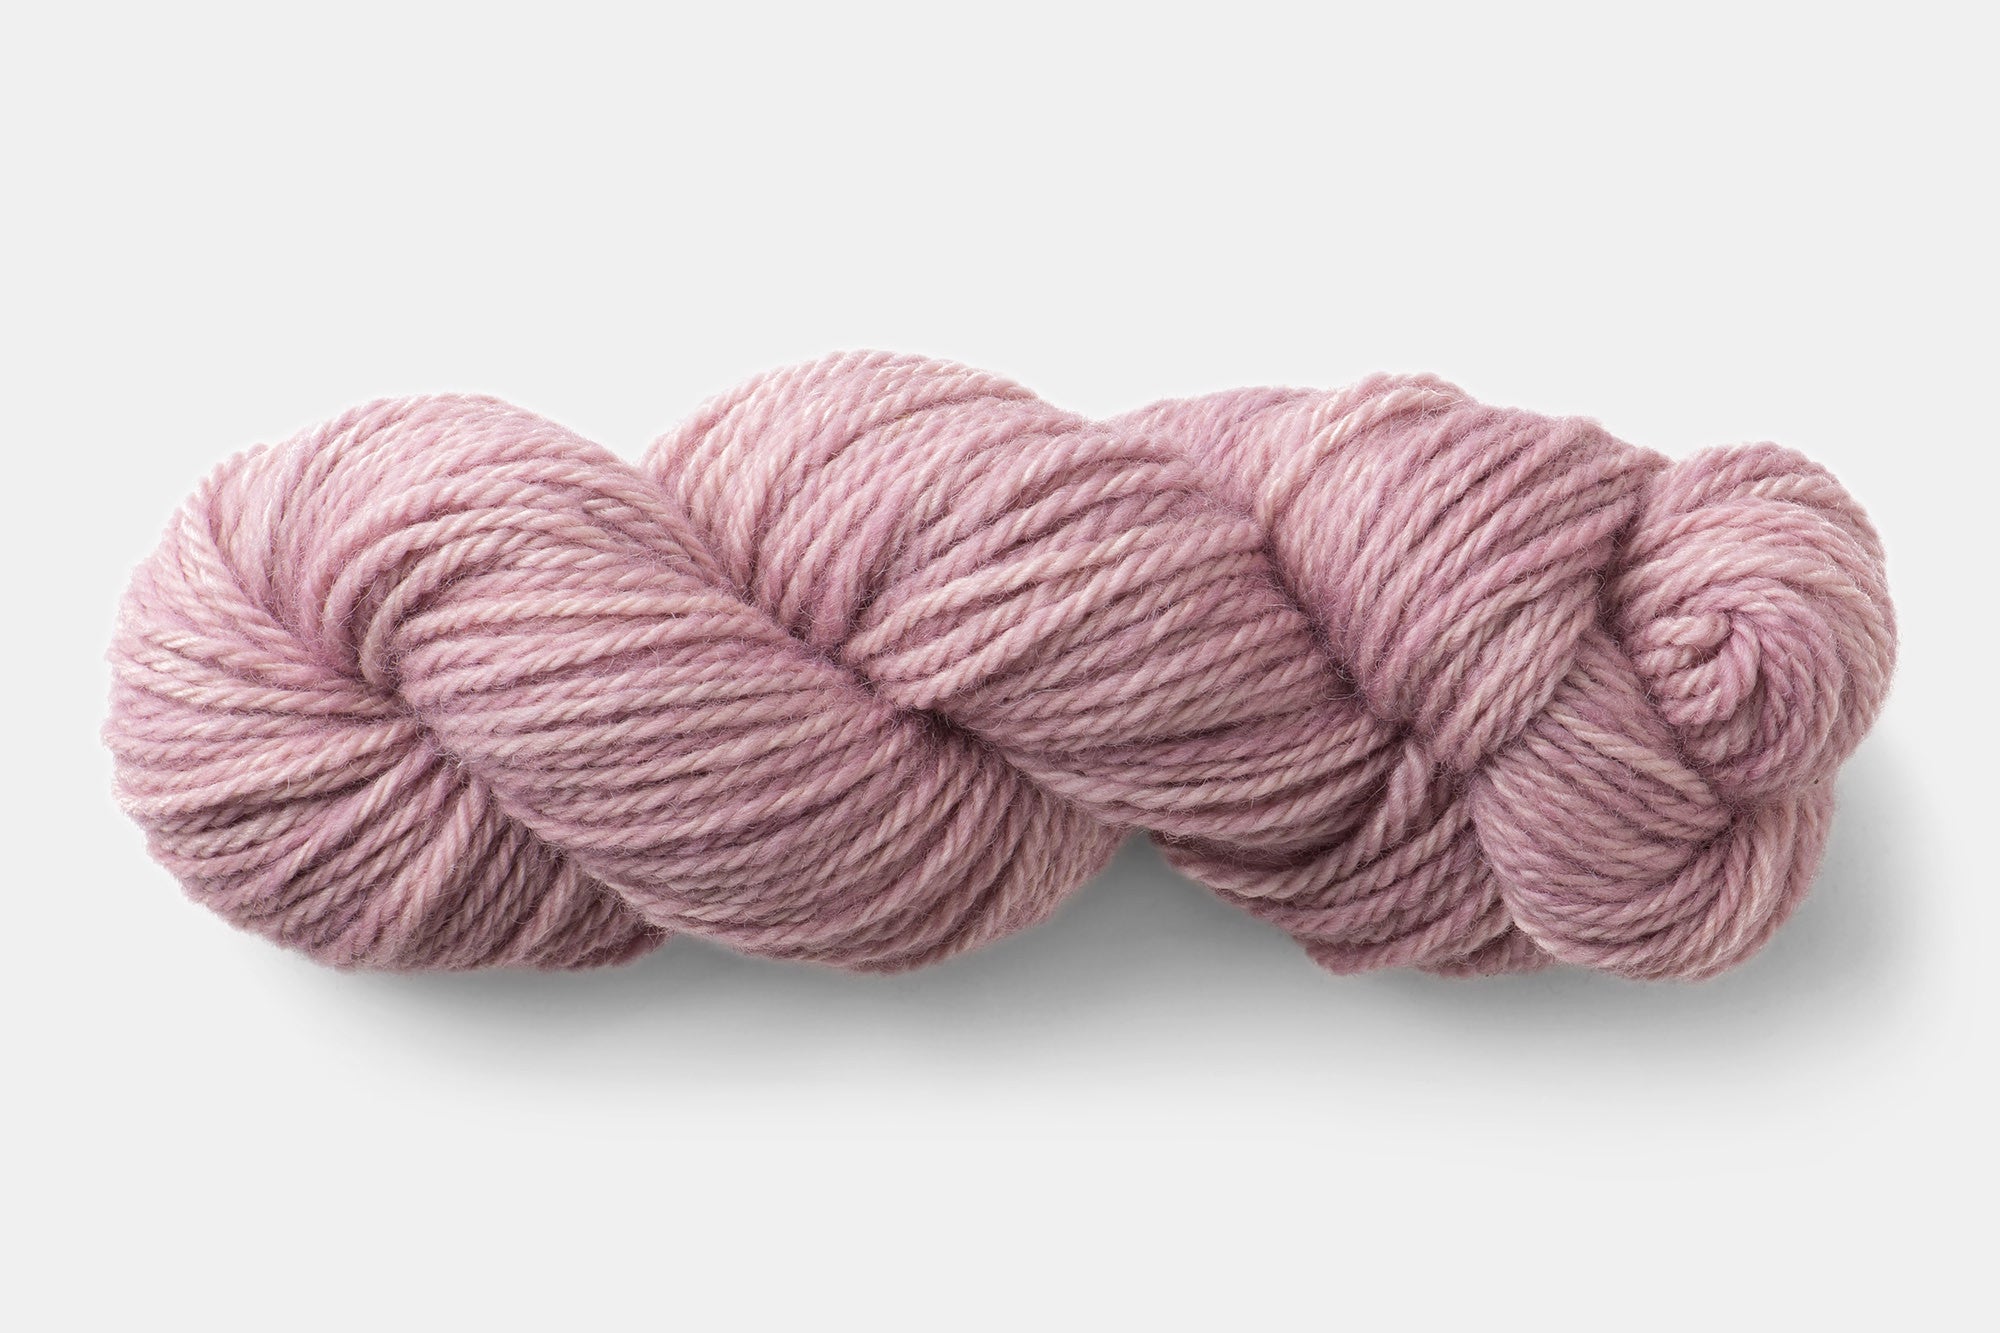 Fleece and Harmony Signature Aran in Lilac